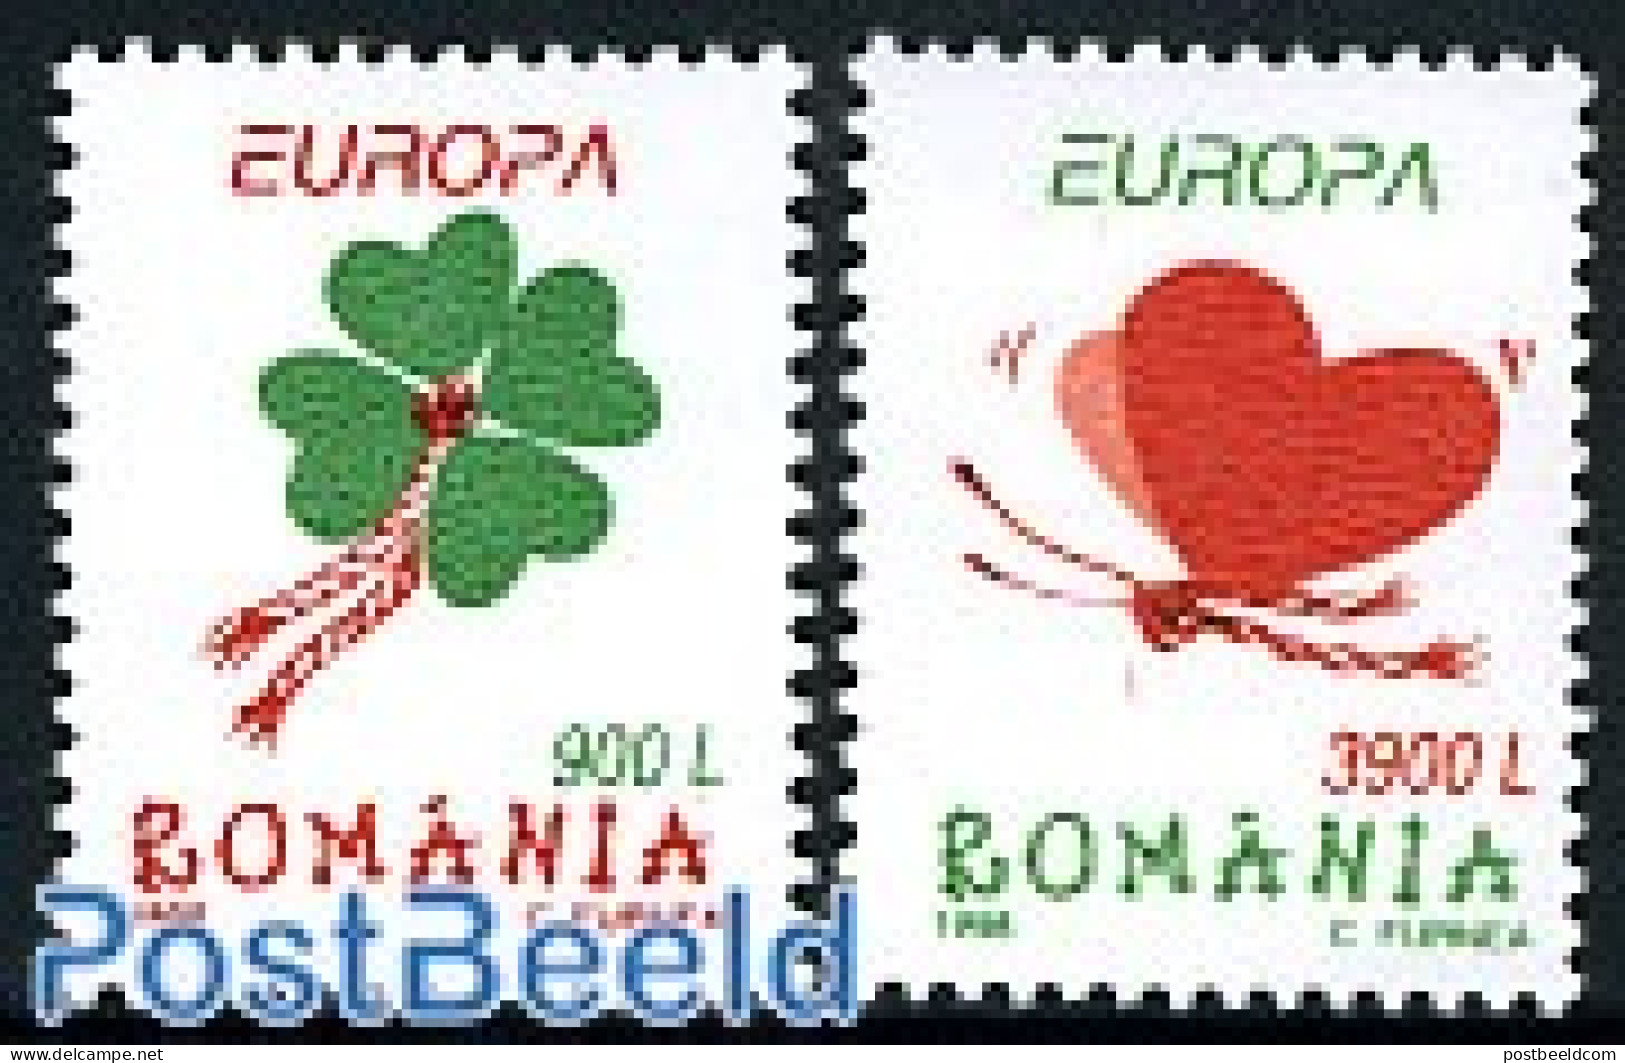 Romania 1998 Europa, Festivals 2v, Mint NH, History - Europa (cept) - Nuevos